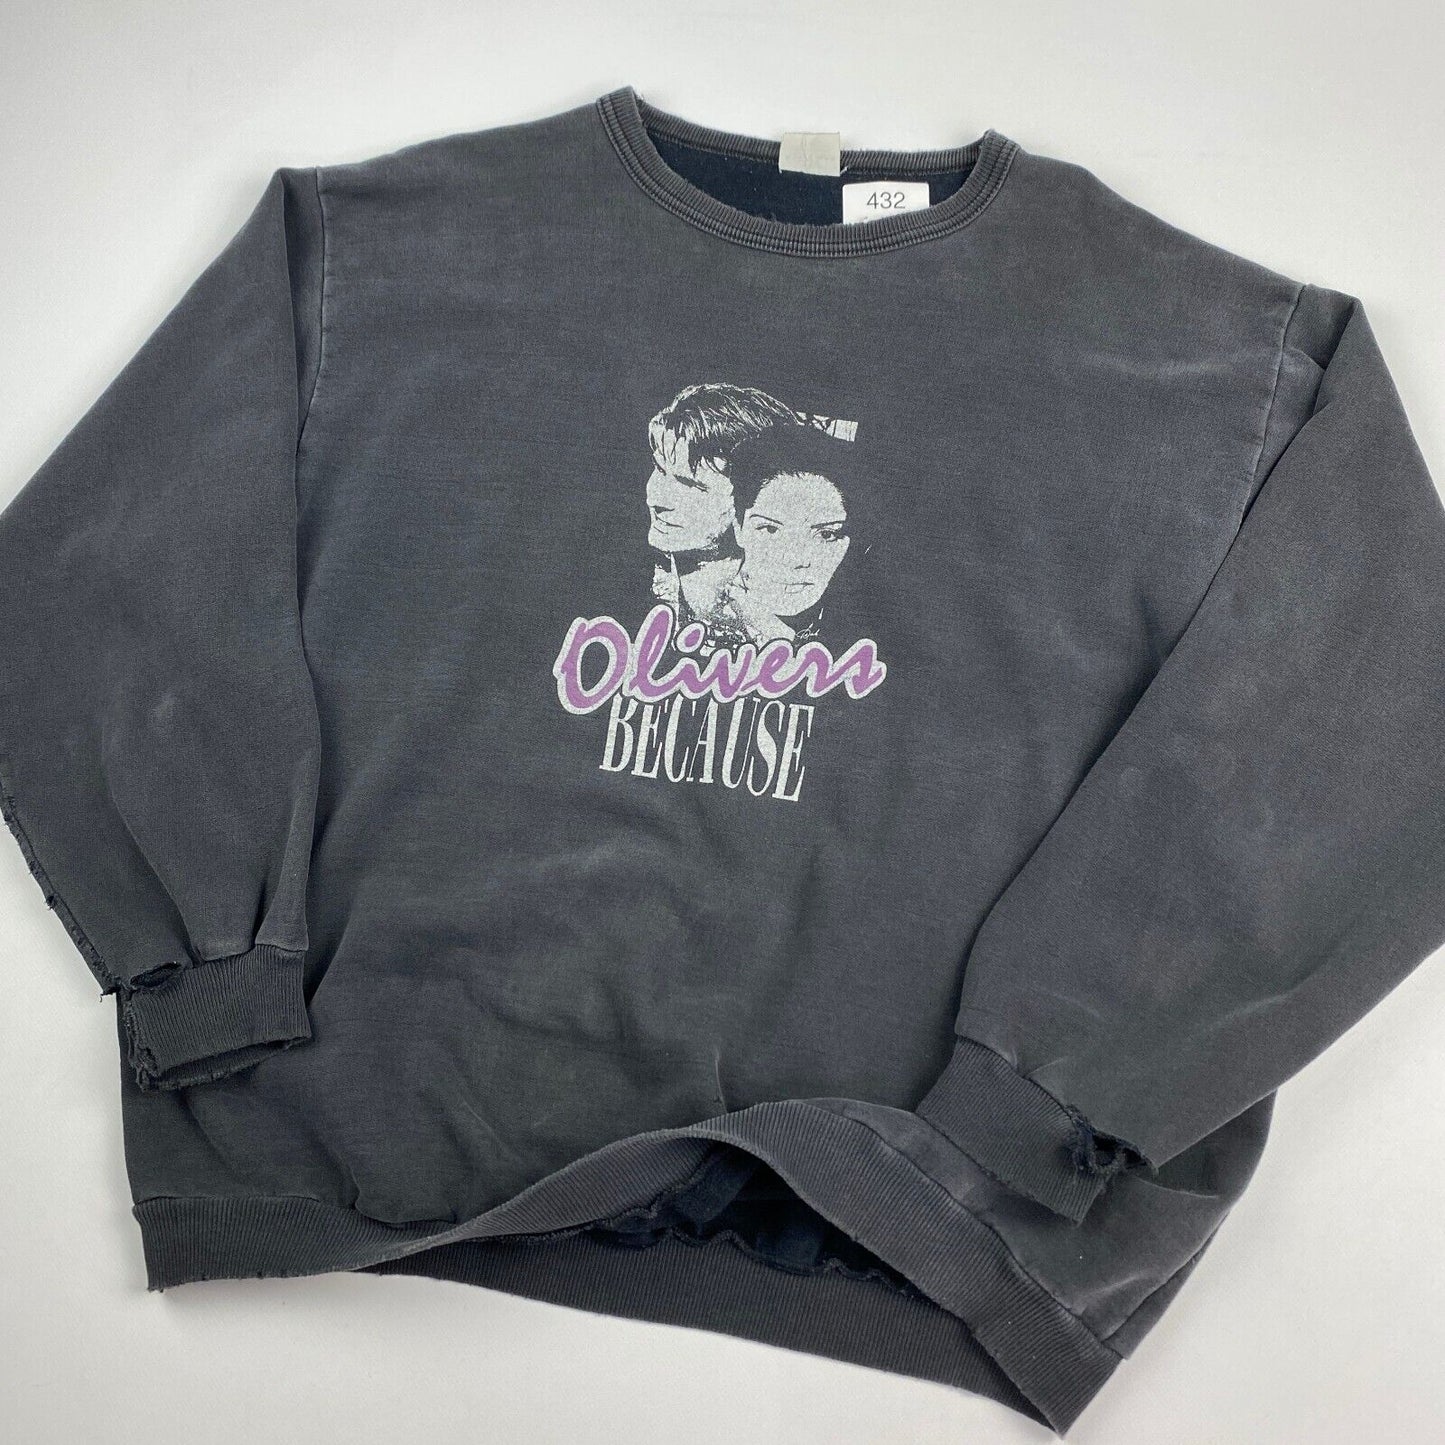 VINTAGE 90s Olivers Because Faded Black Crewneck Sweater sz XL Men